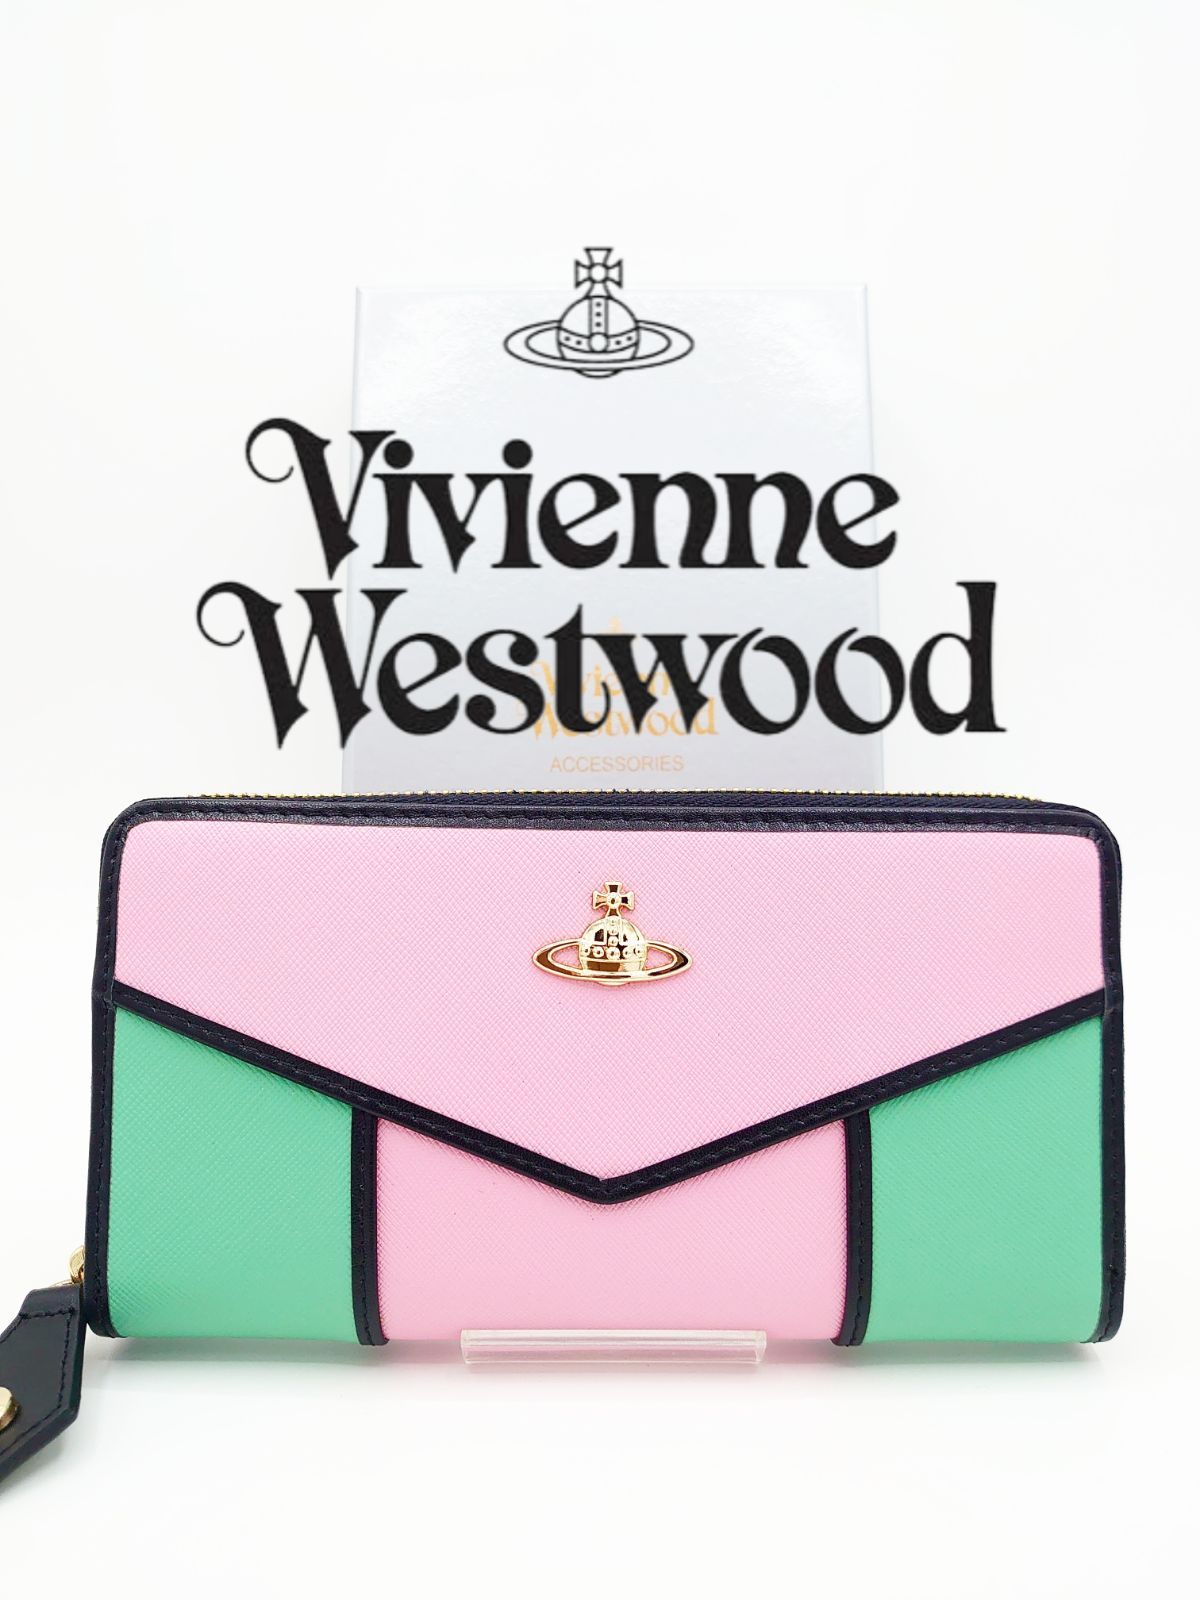 Vivienne Westwood 長財布 ピンク グリーン - 長財布